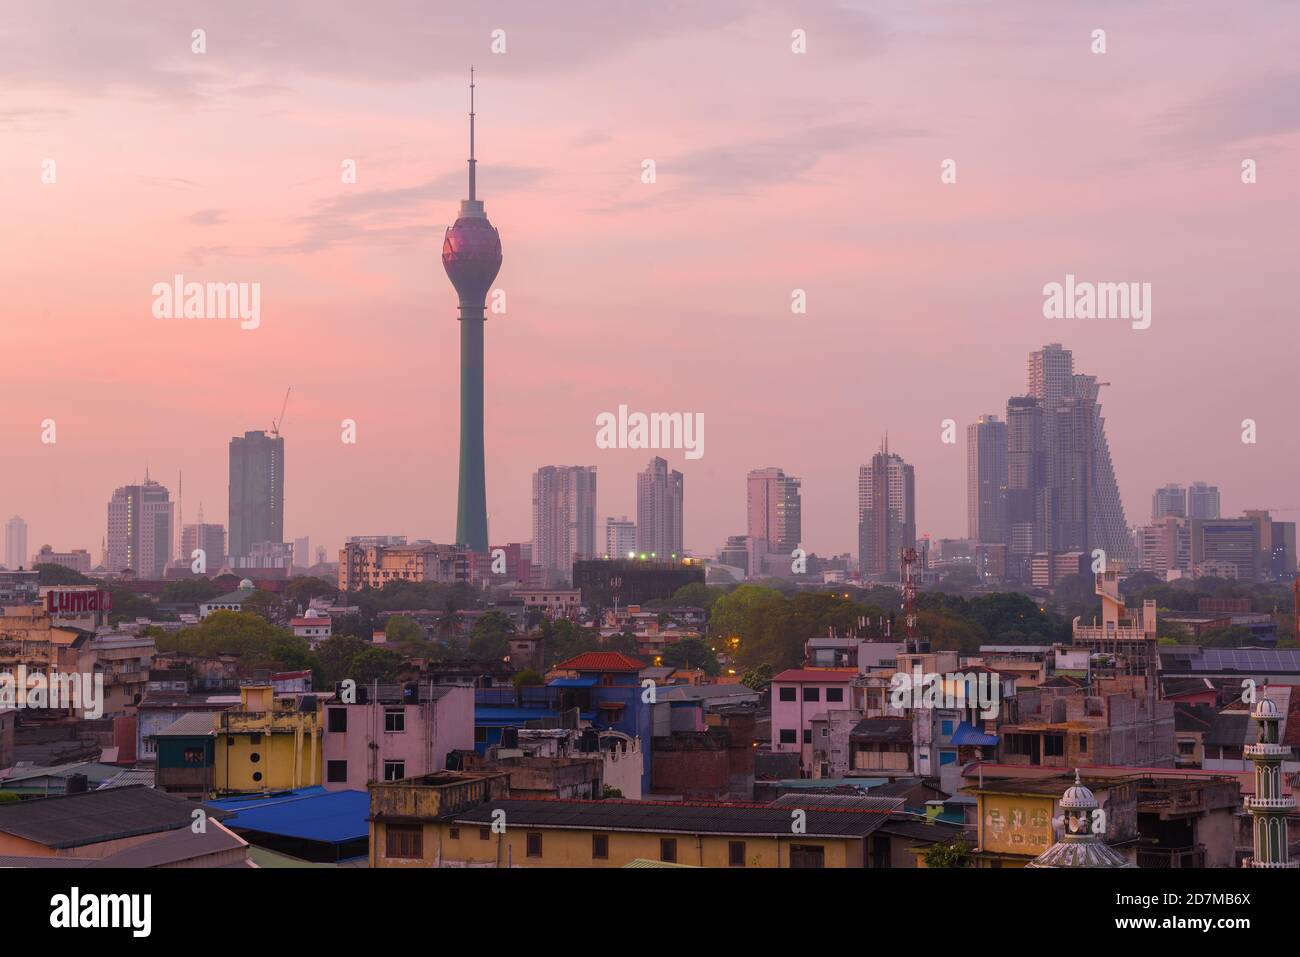 COLOMBO, SRI LANKA - 22 FÉVRIER 2020 : lever de soleil rose au-dessus de Colombo moderne Banque D'Images